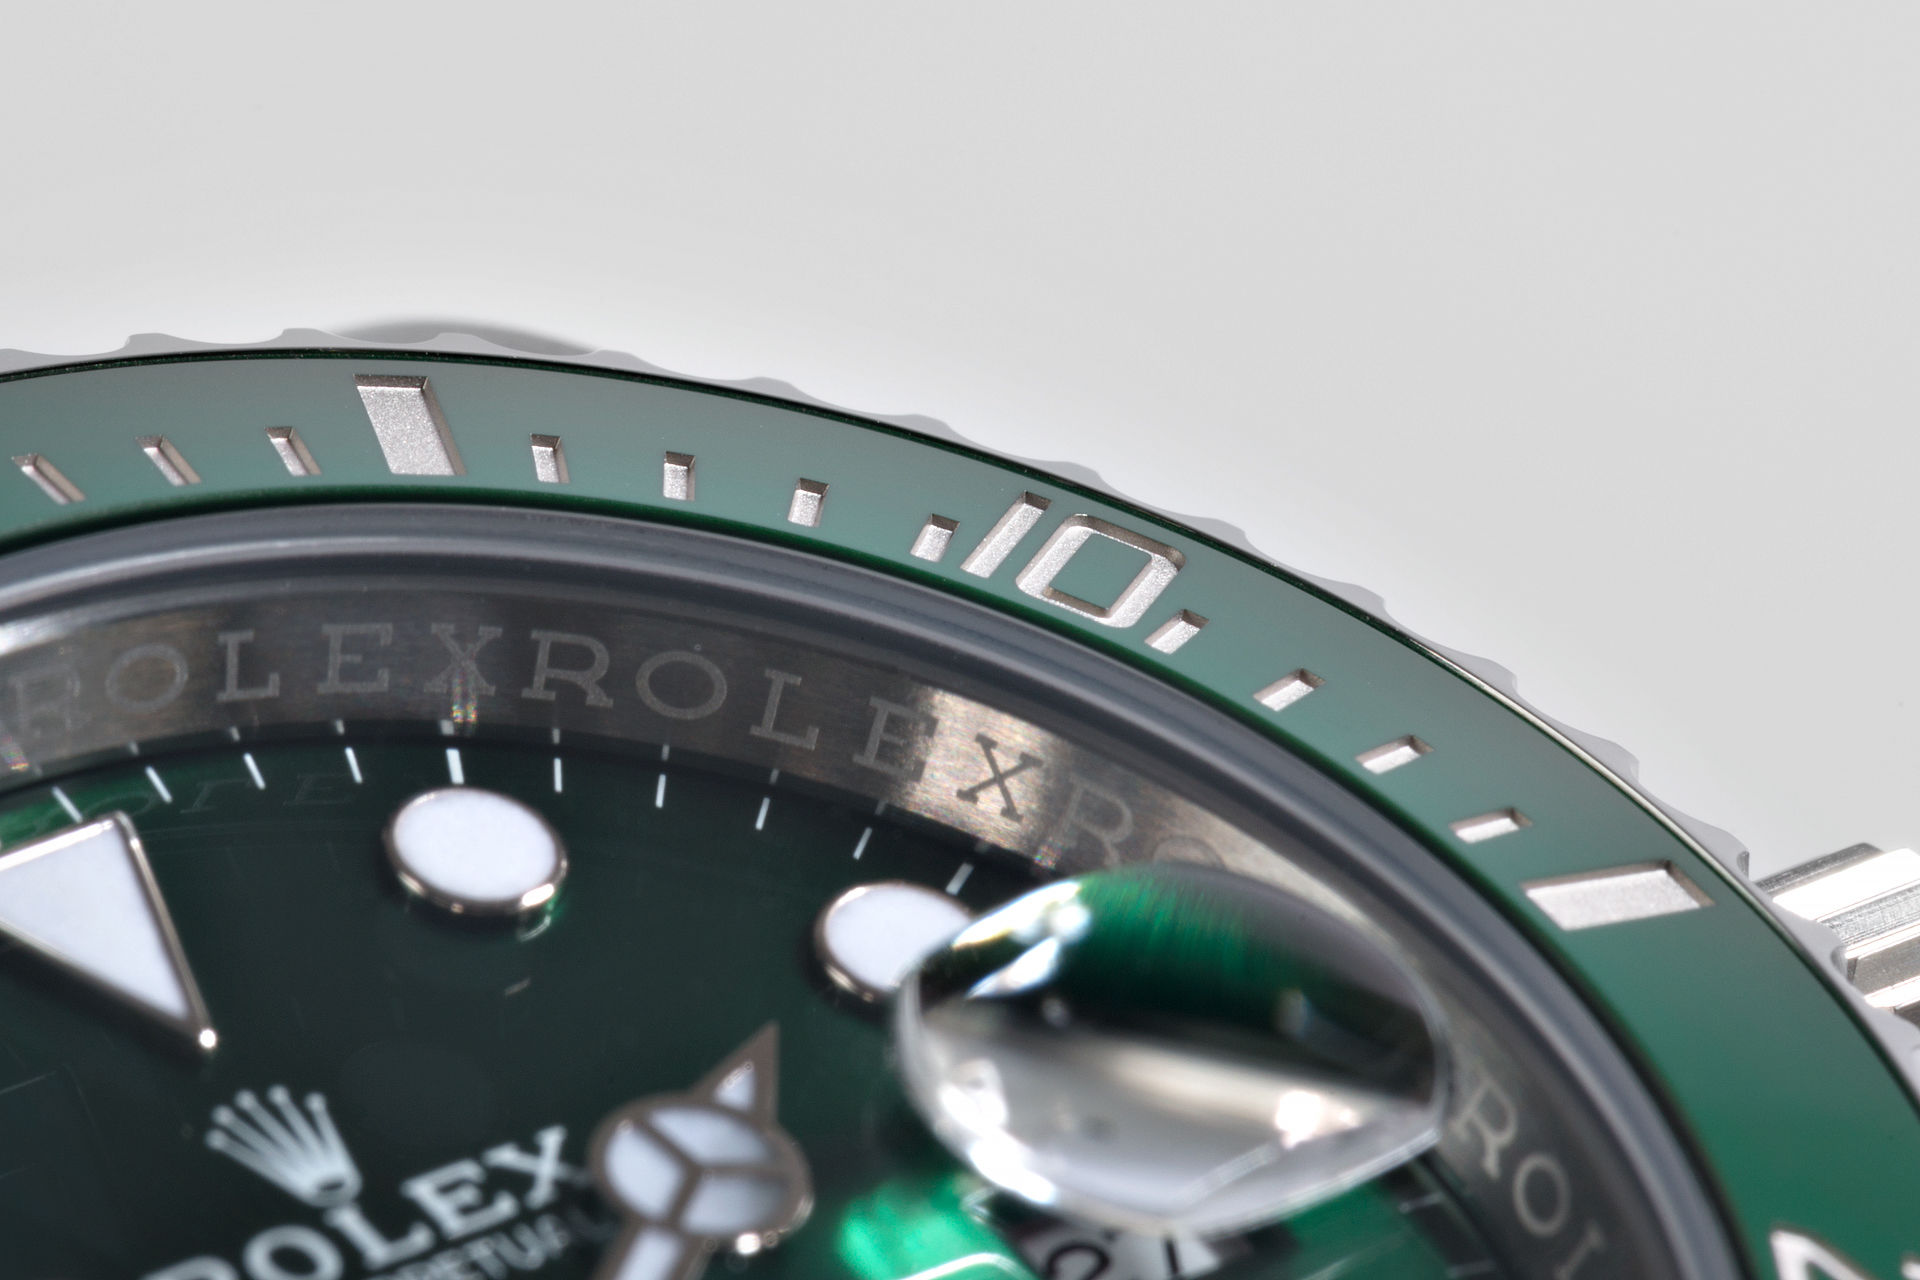 ref 116610LV | 'Brand New Fully Stickered' | Rolex Submariner Date